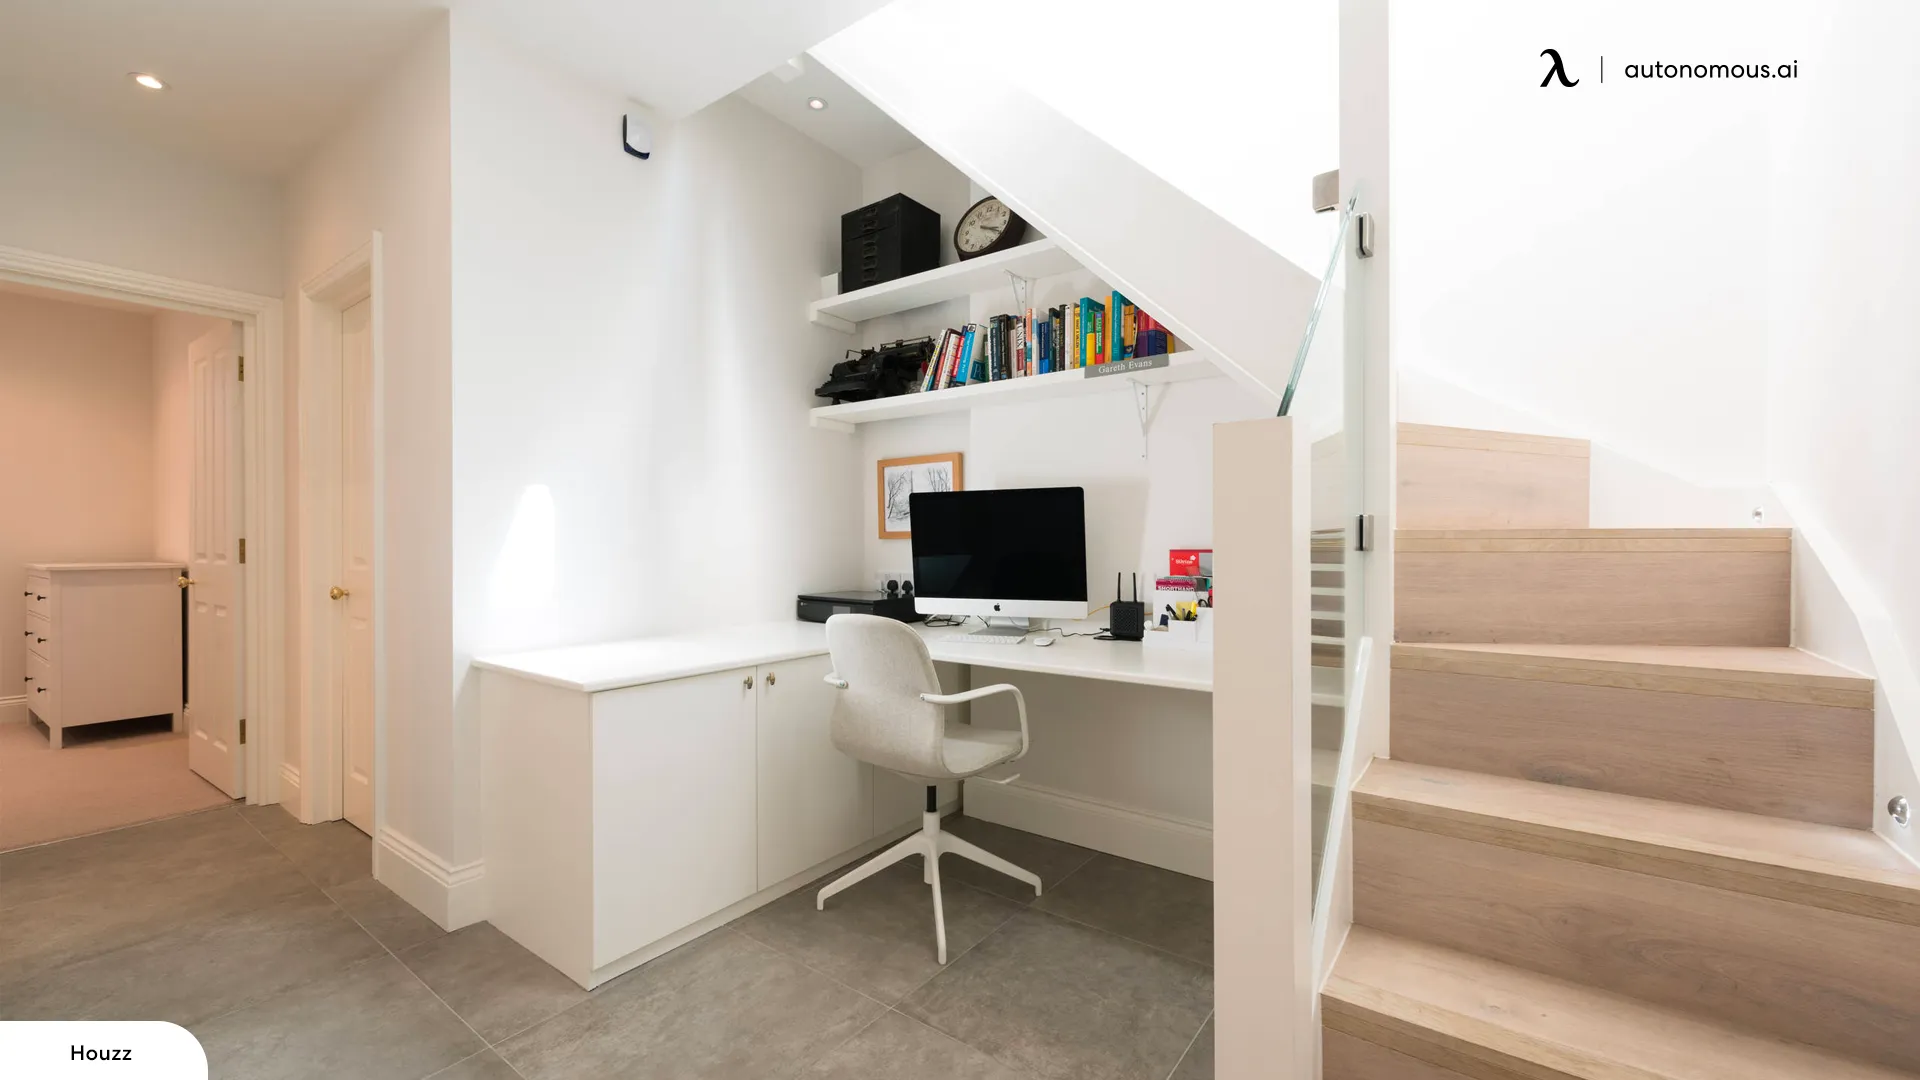 Basement Office with Storage - basement office ideas